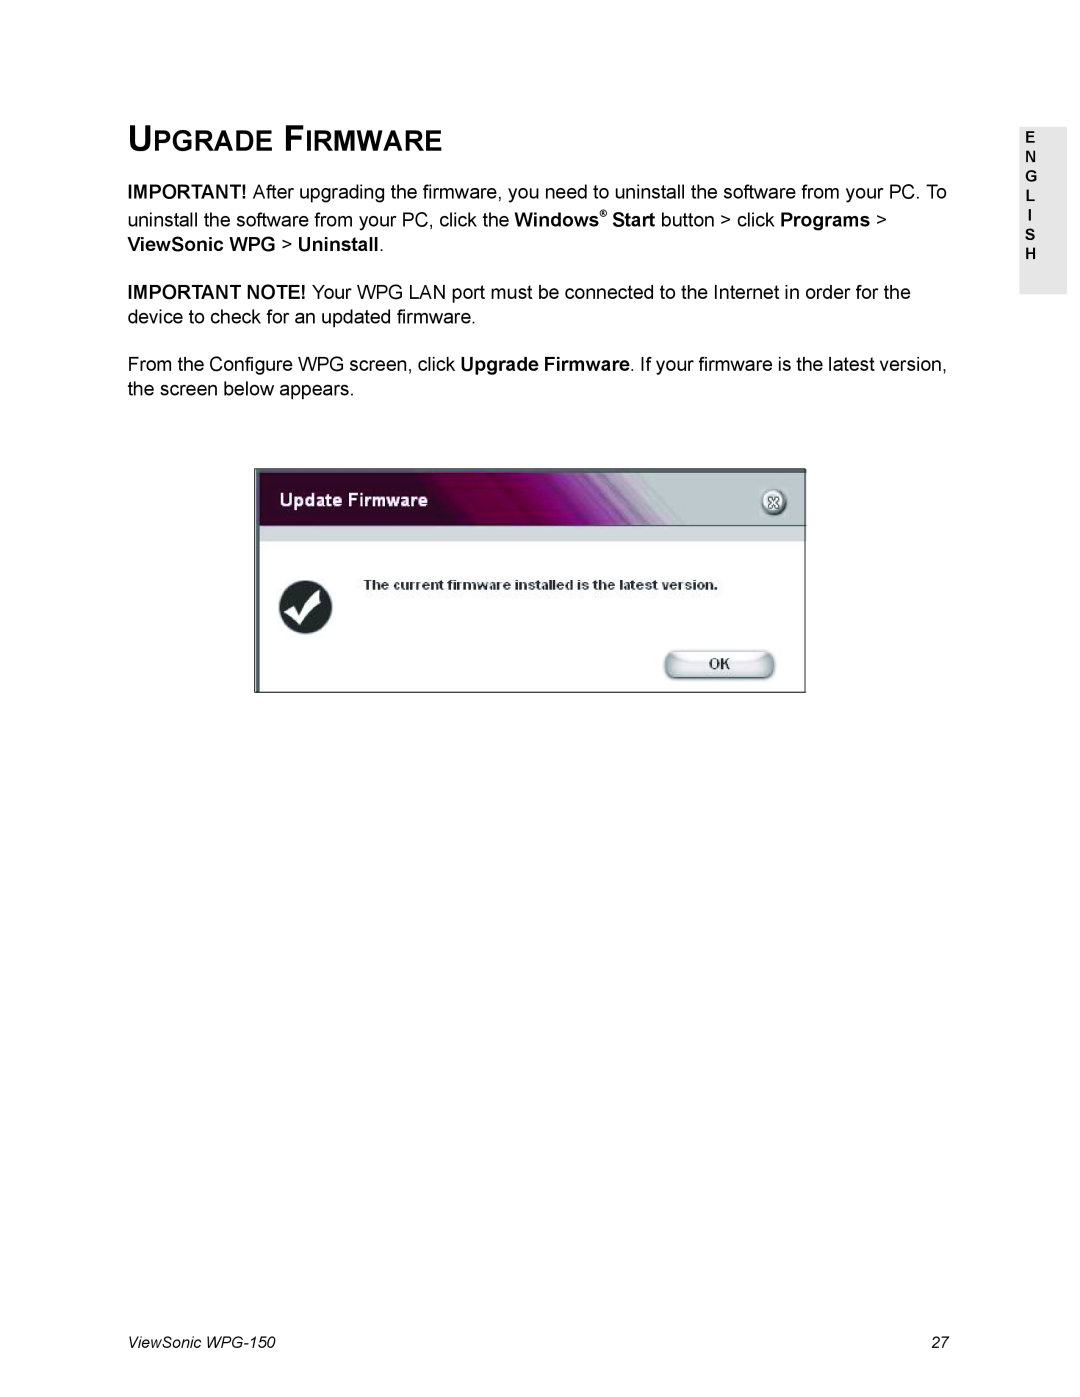 ViewSonic WPG-150 manual Upgrade Firmware 